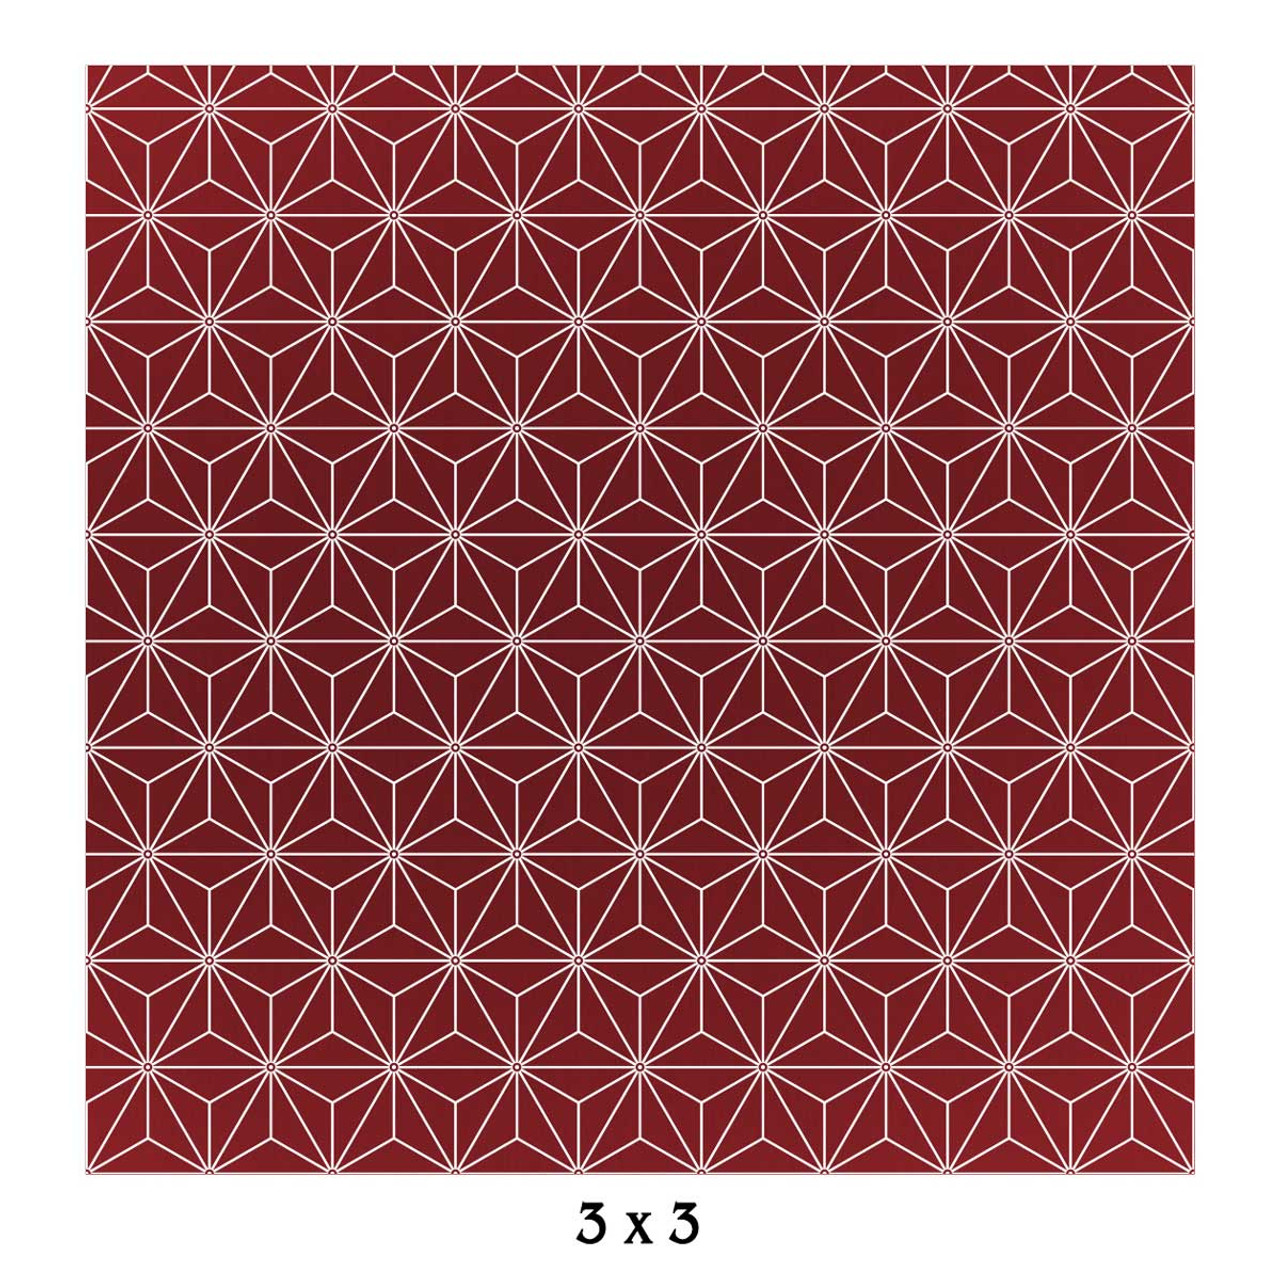 Sheet, anodized aluminum, purple, 5-3/4 x 5-3/4 inch square, 20